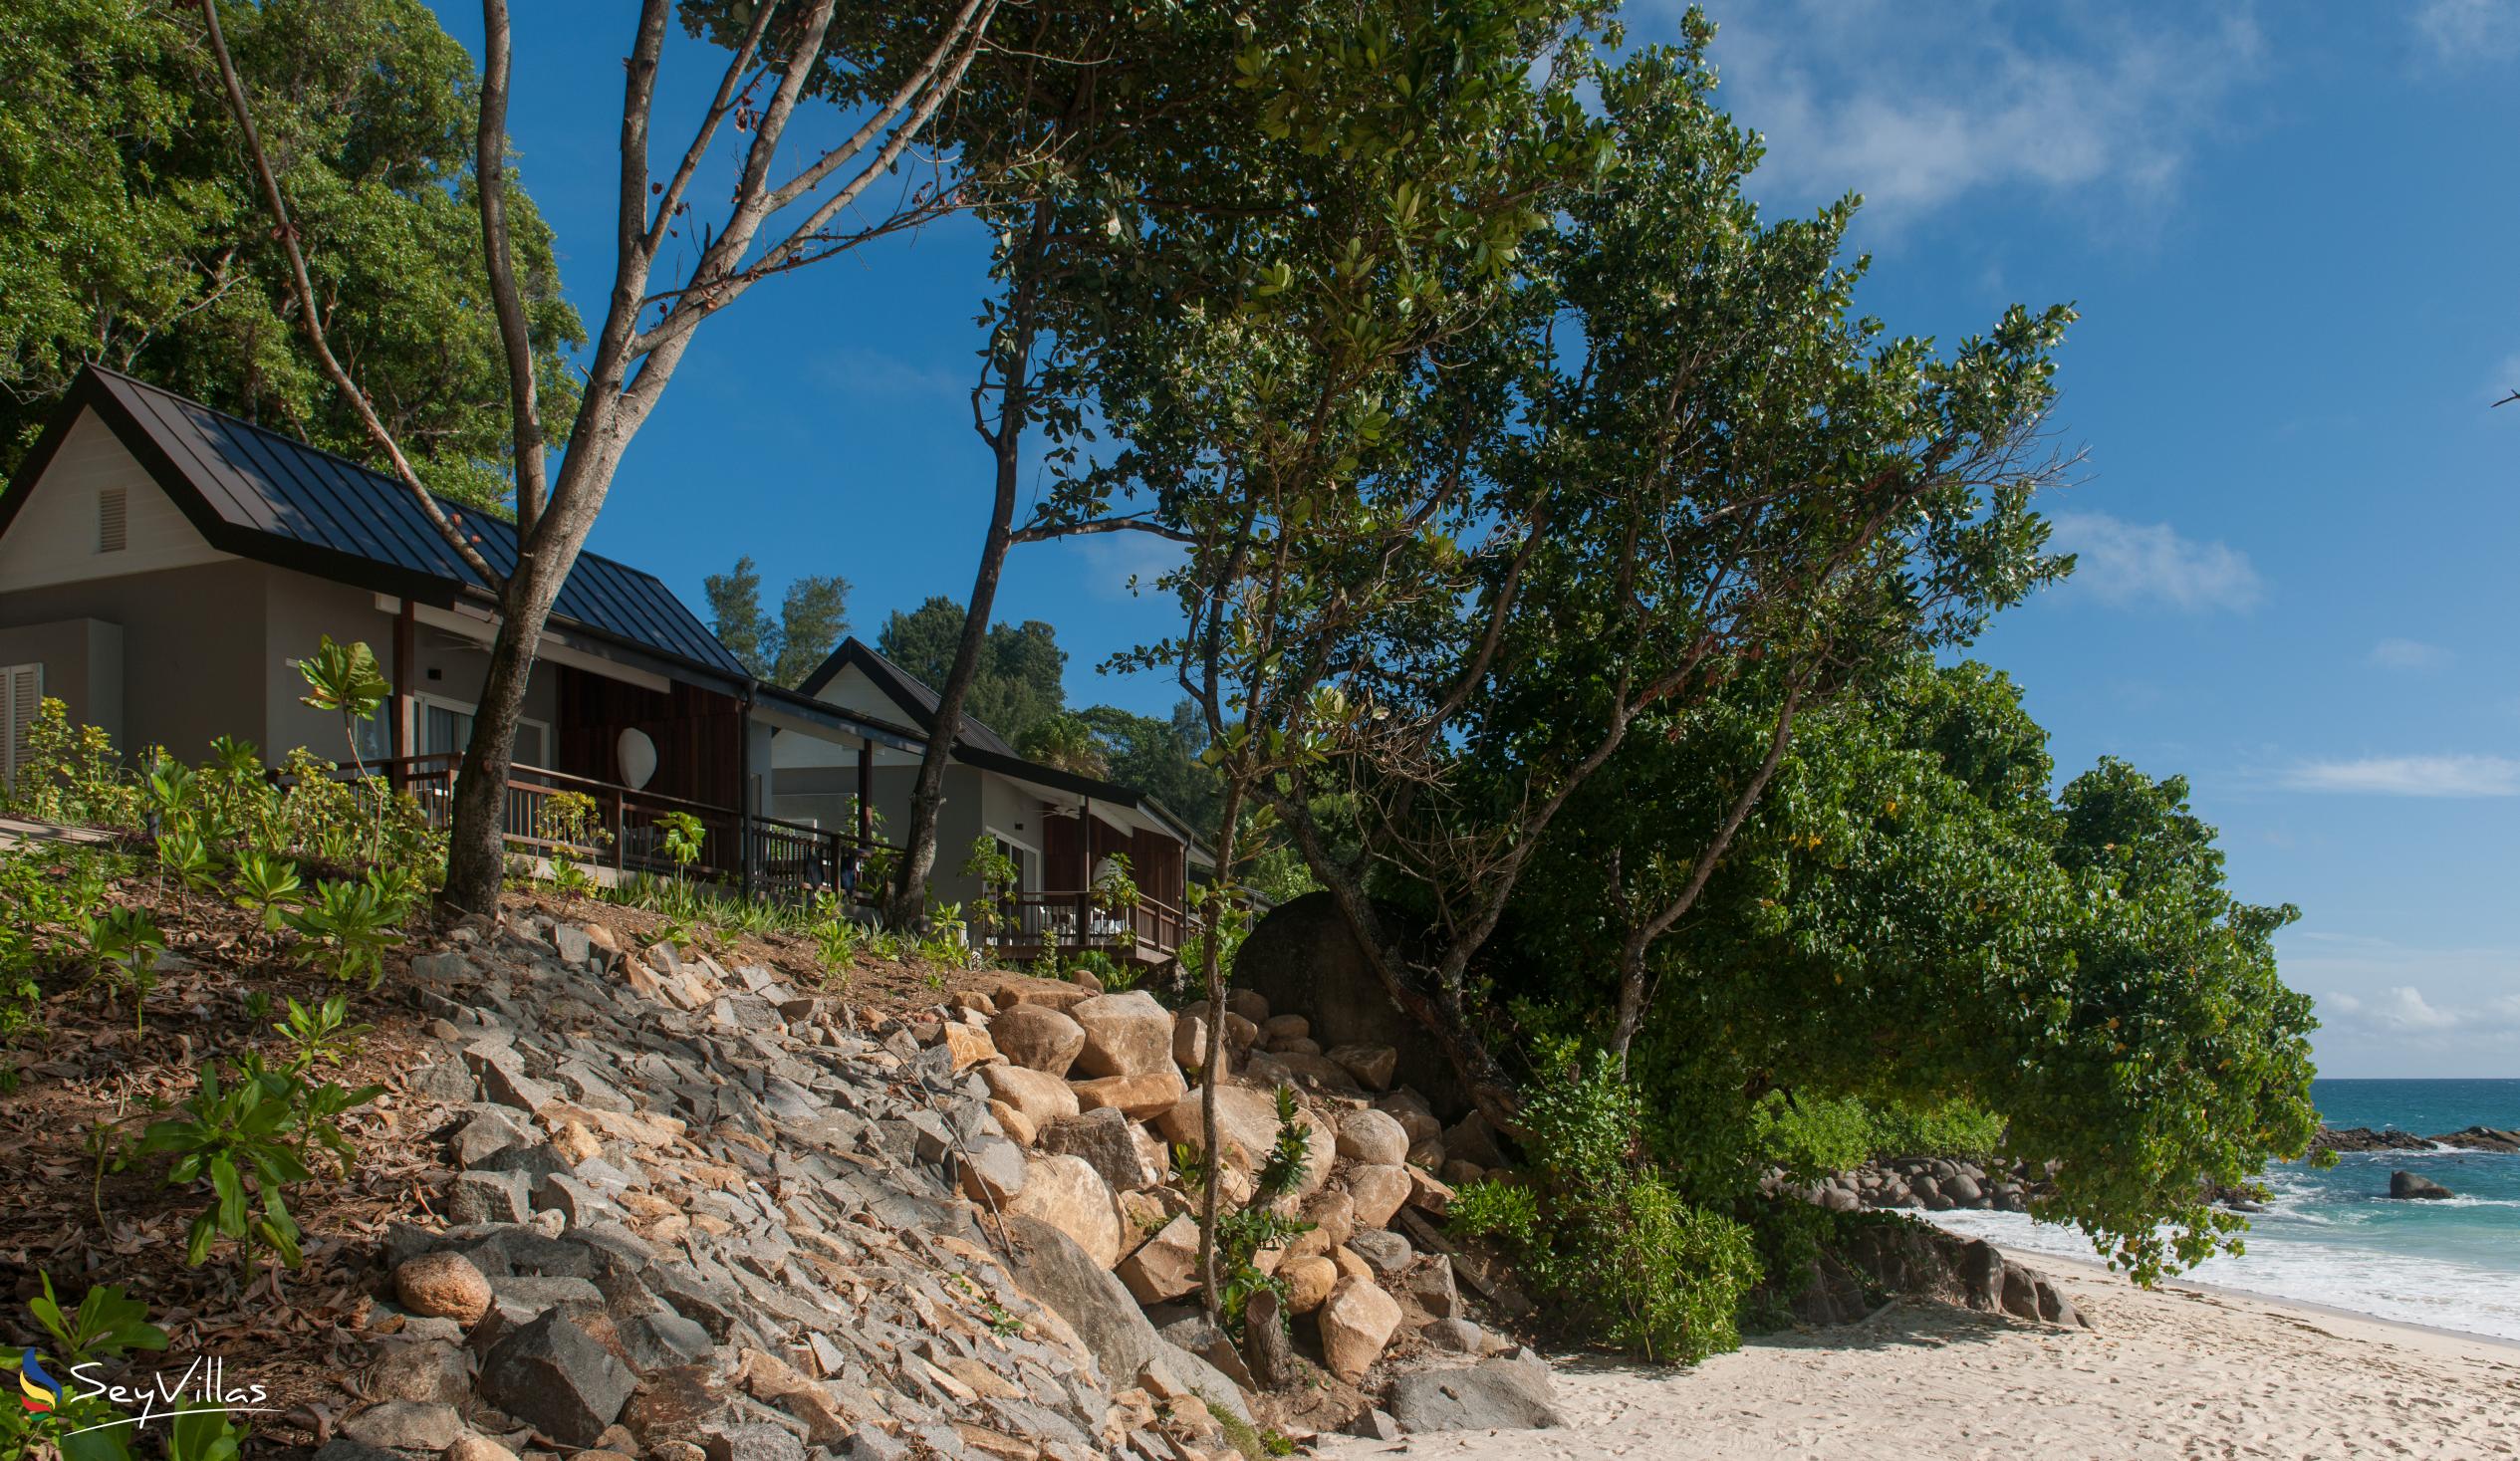 Foto 20: Carana Beach Hotel - Chalet-Vue sur l’océan - Mahé (Seychelles)